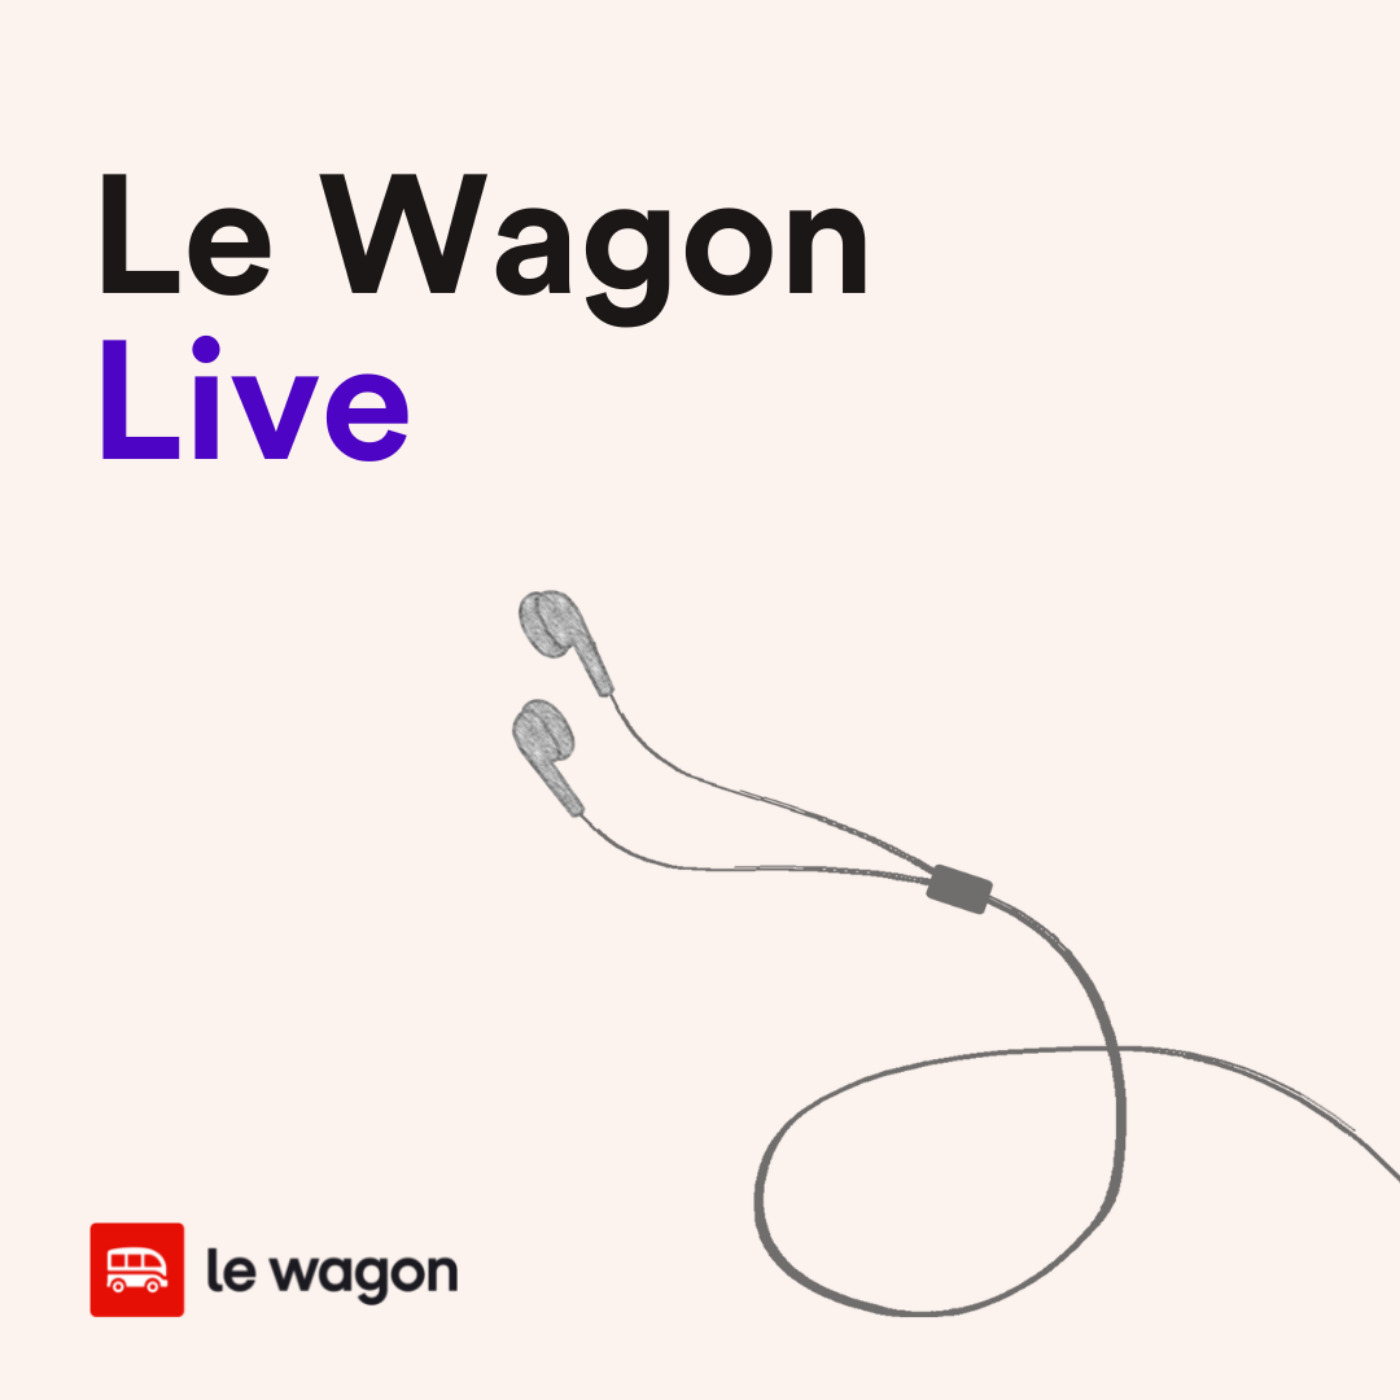 Le Wagon Live